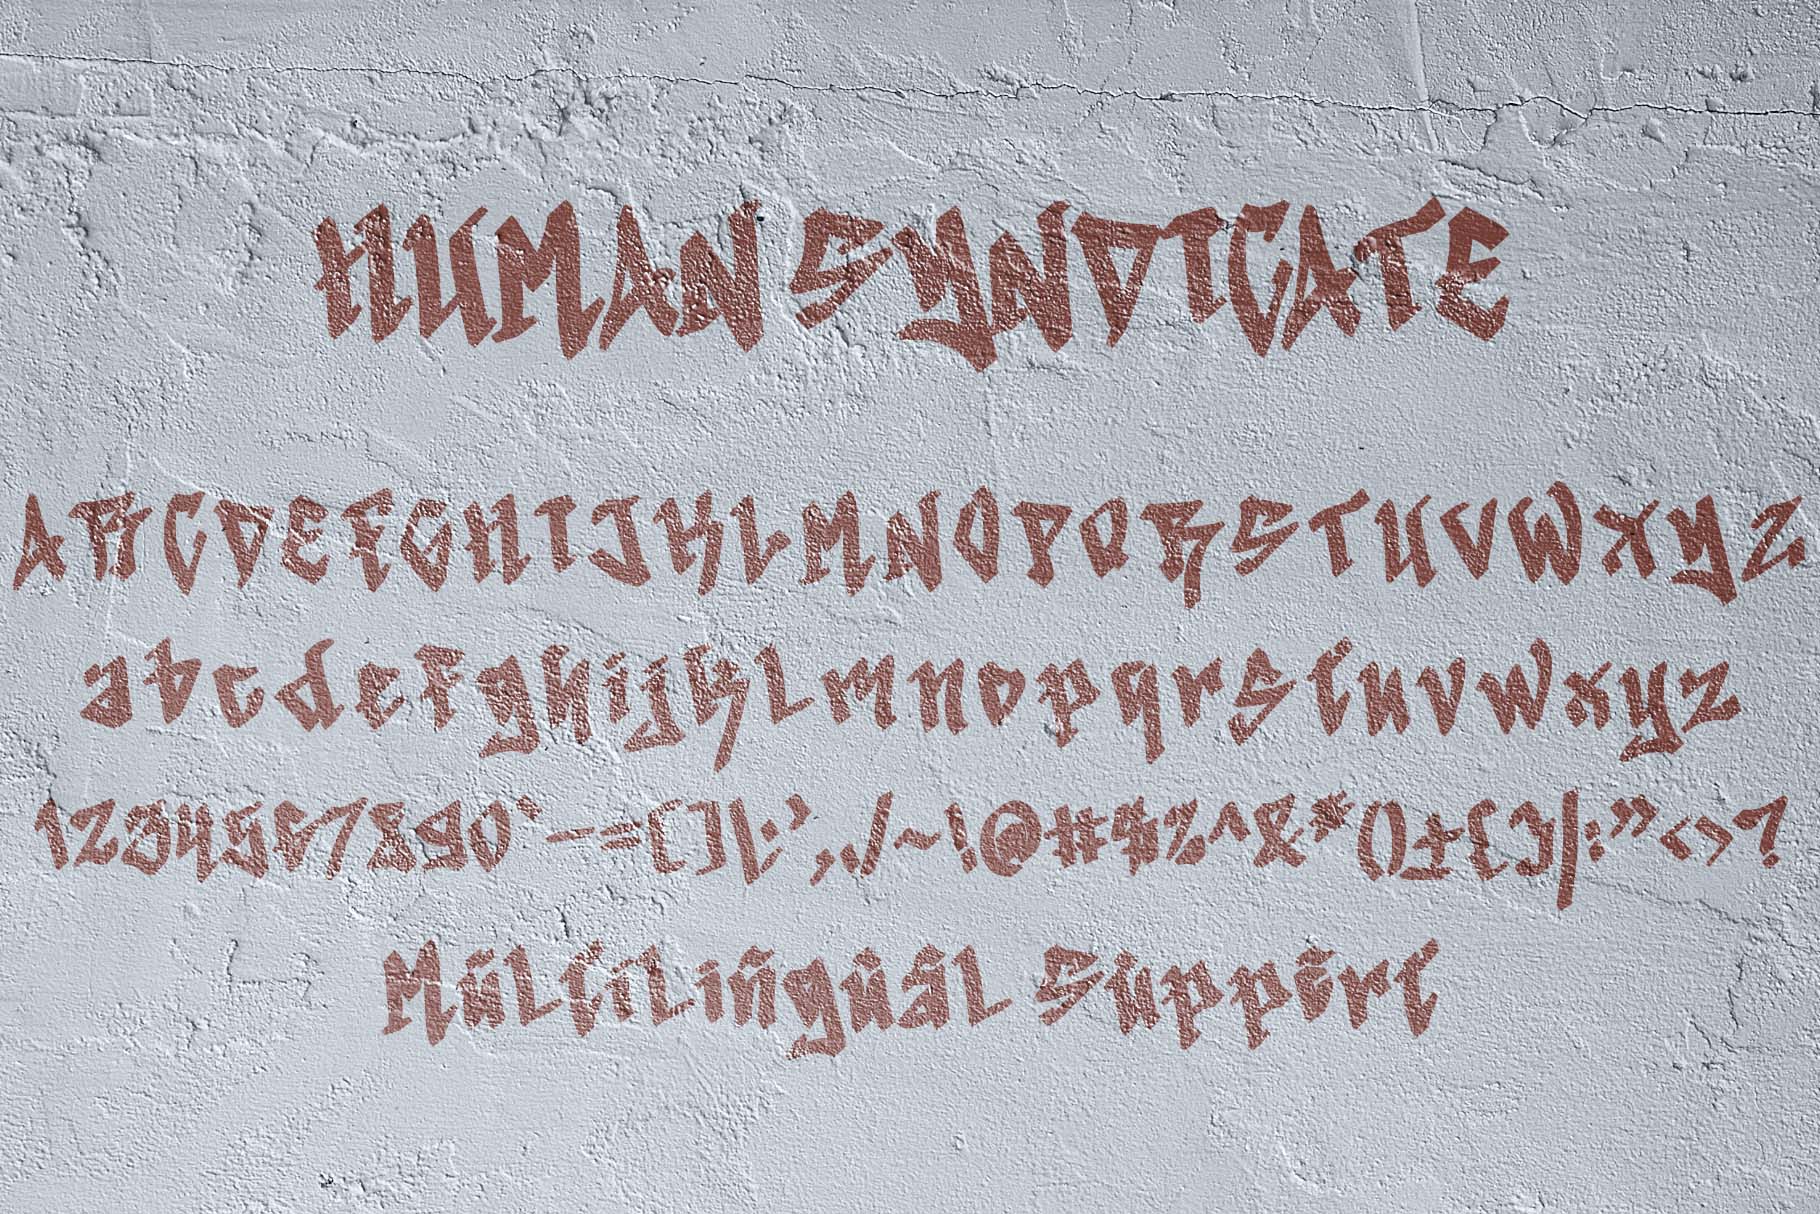 Human Syndicate - 1